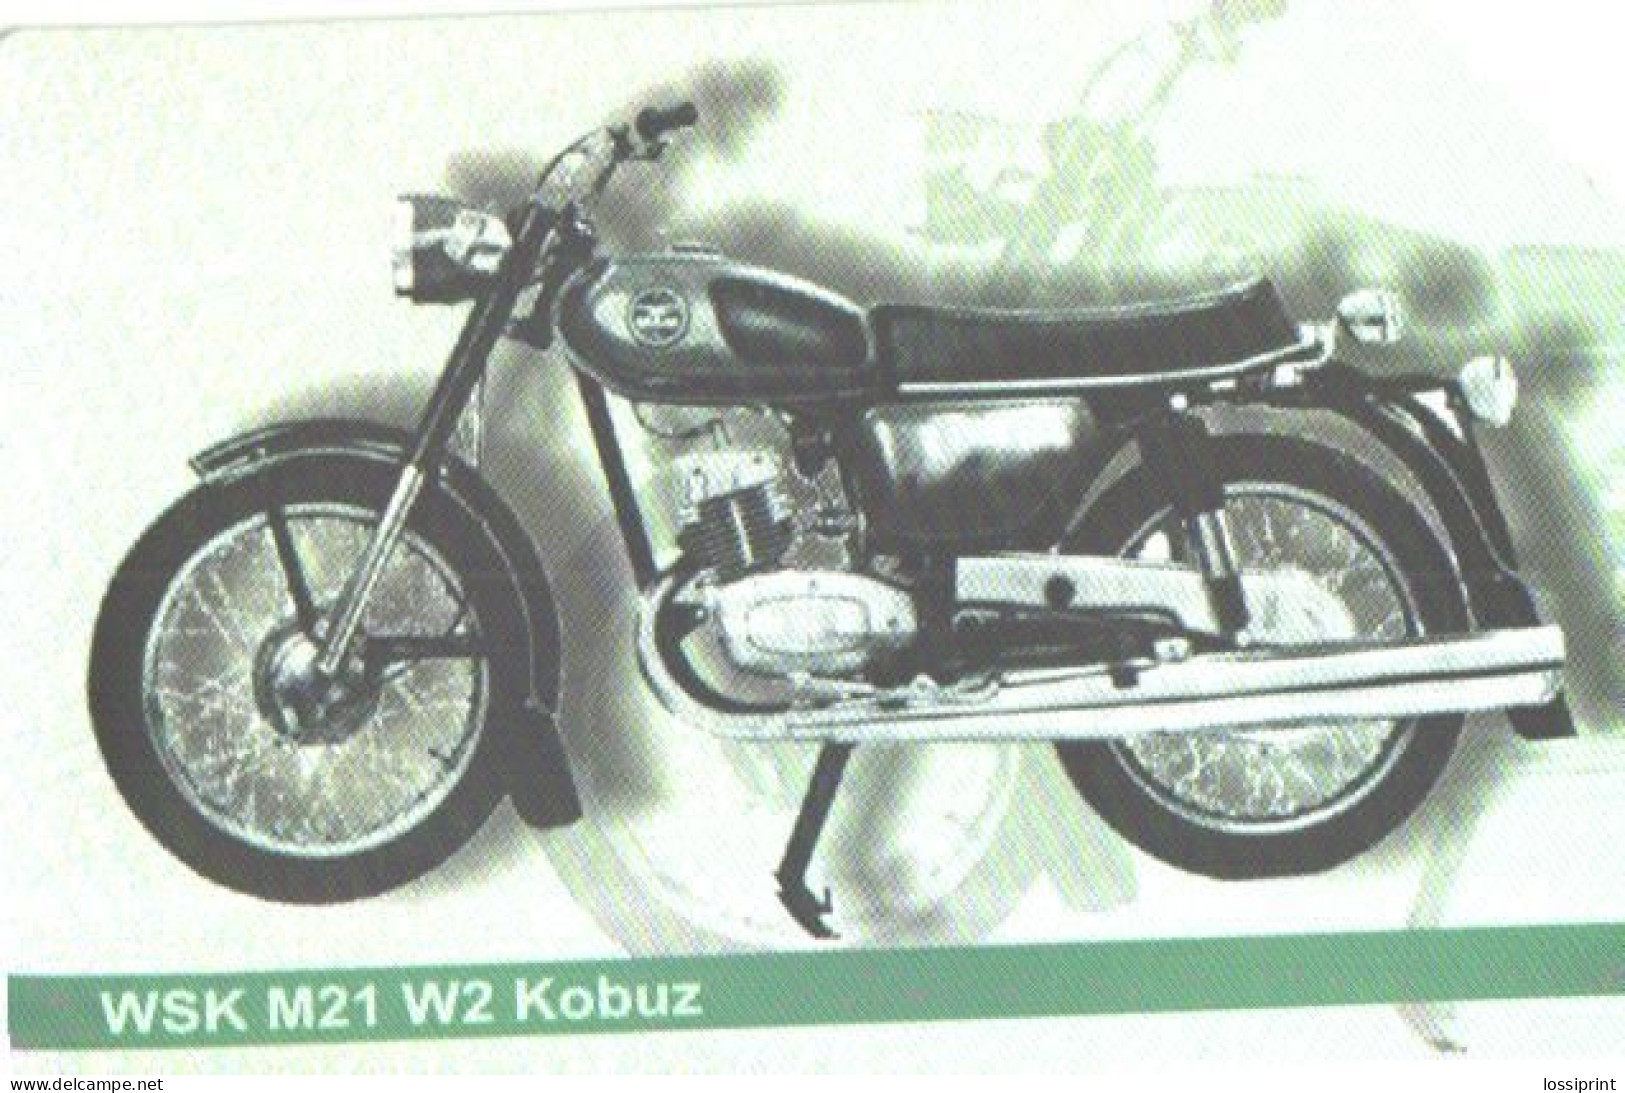 Poland:Used Phonecard, Telekomunikacja Polska S.A., 25 Units, Motorbike WSK M21 W2 Kobuz - Motos